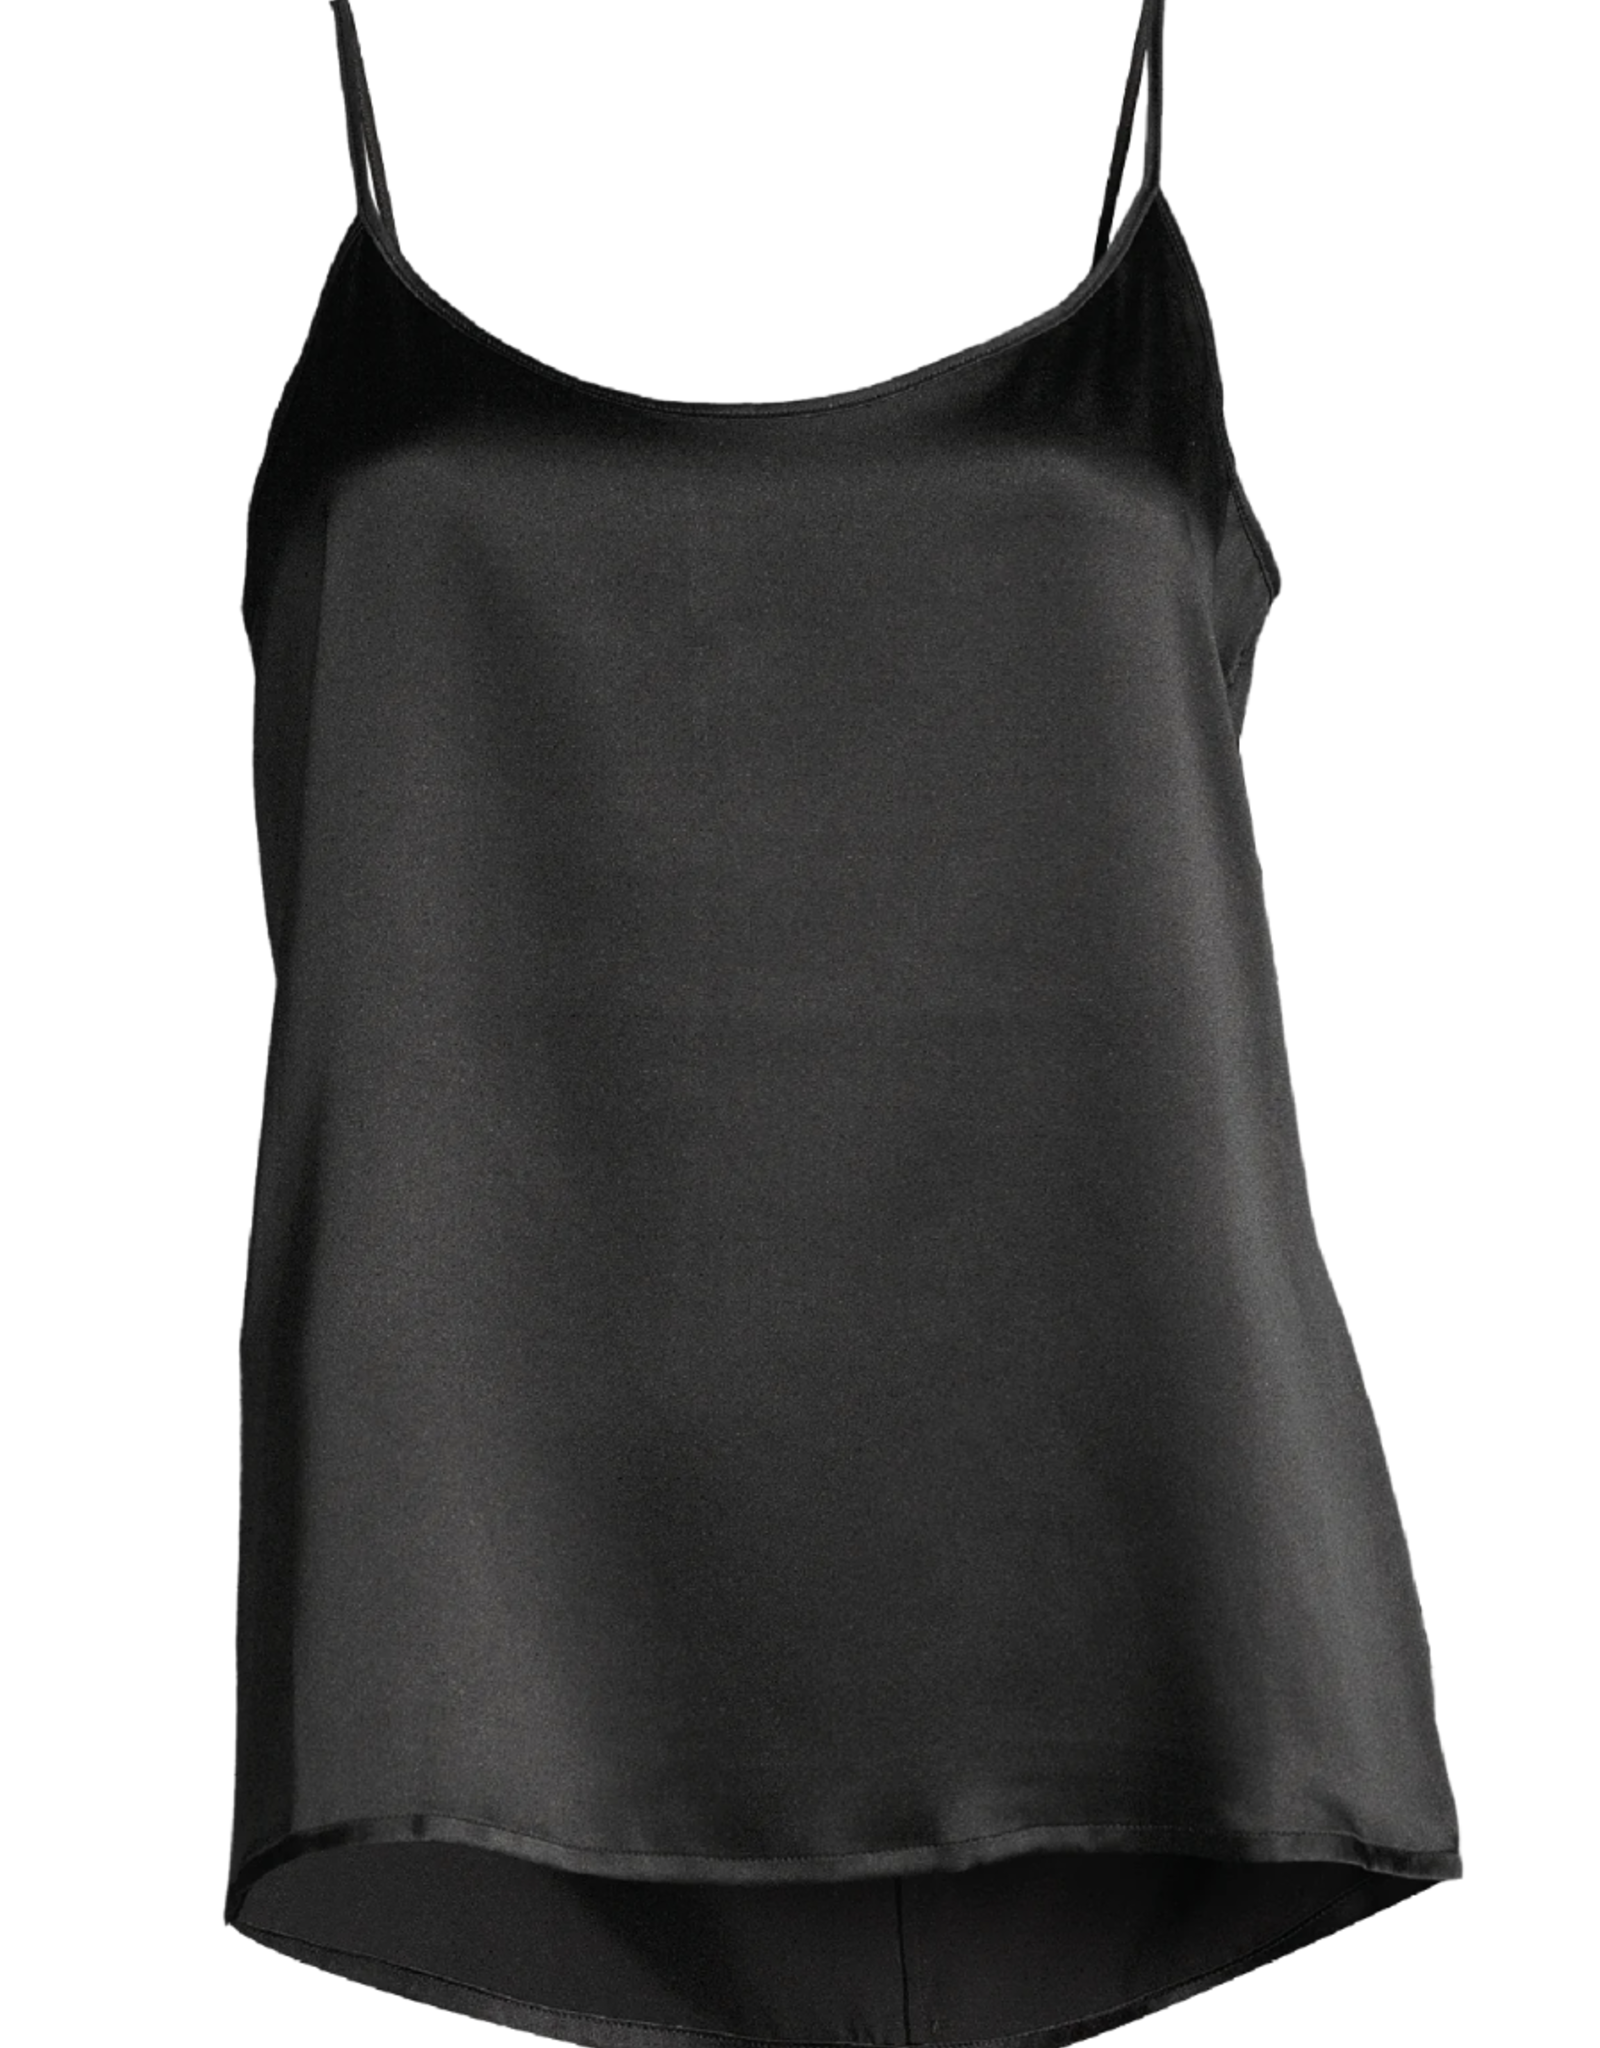 Silky Black Cami with Adjustable Straps - Addition Elle